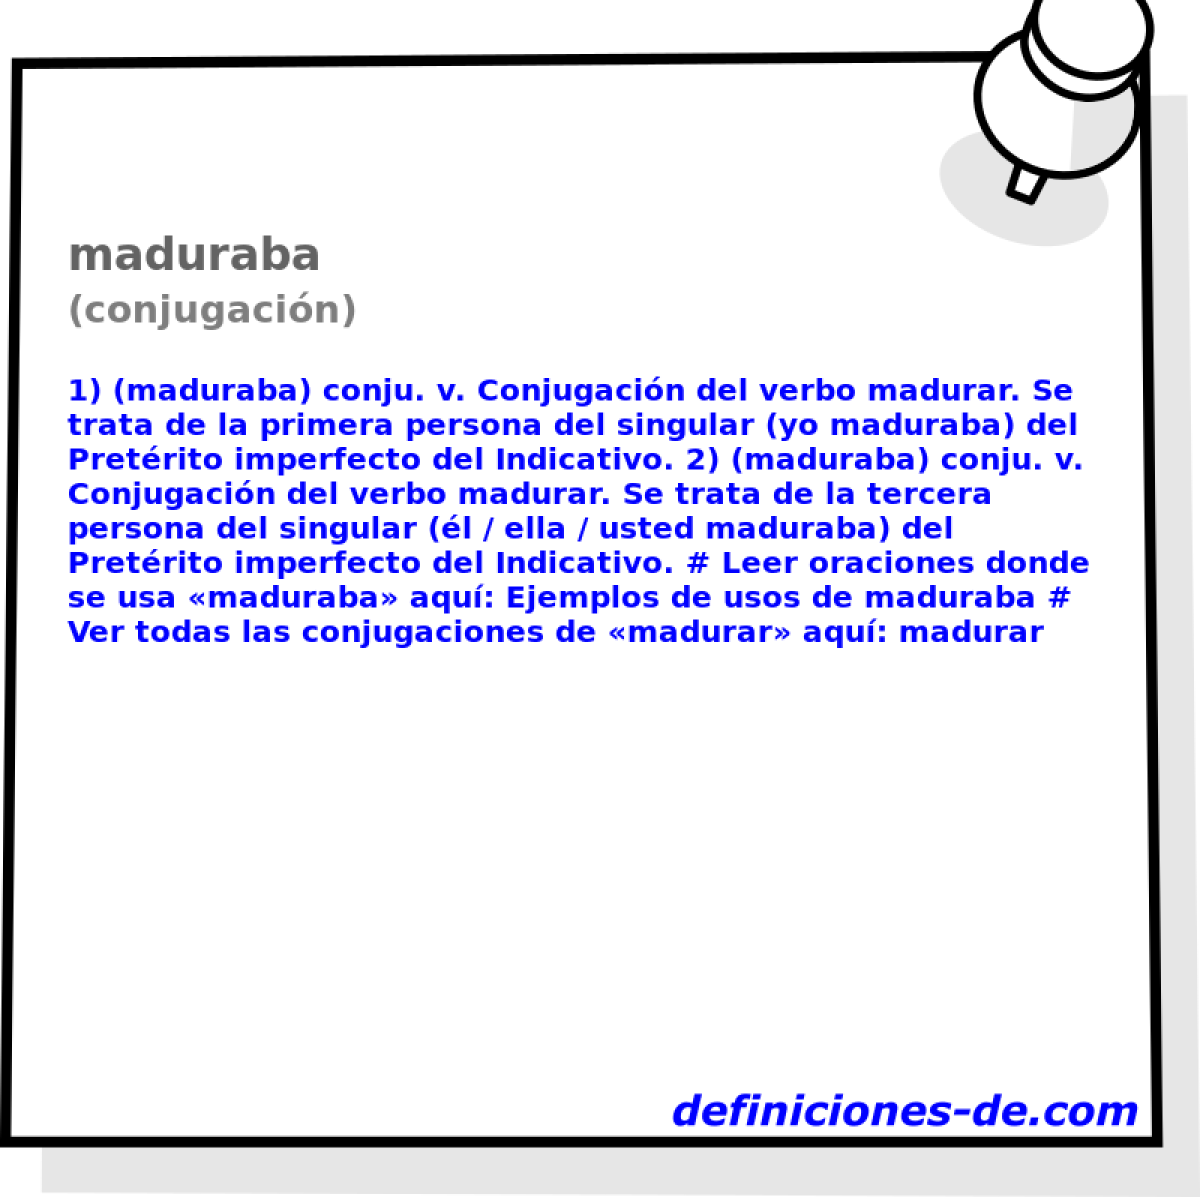 maduraba (conjugacin)